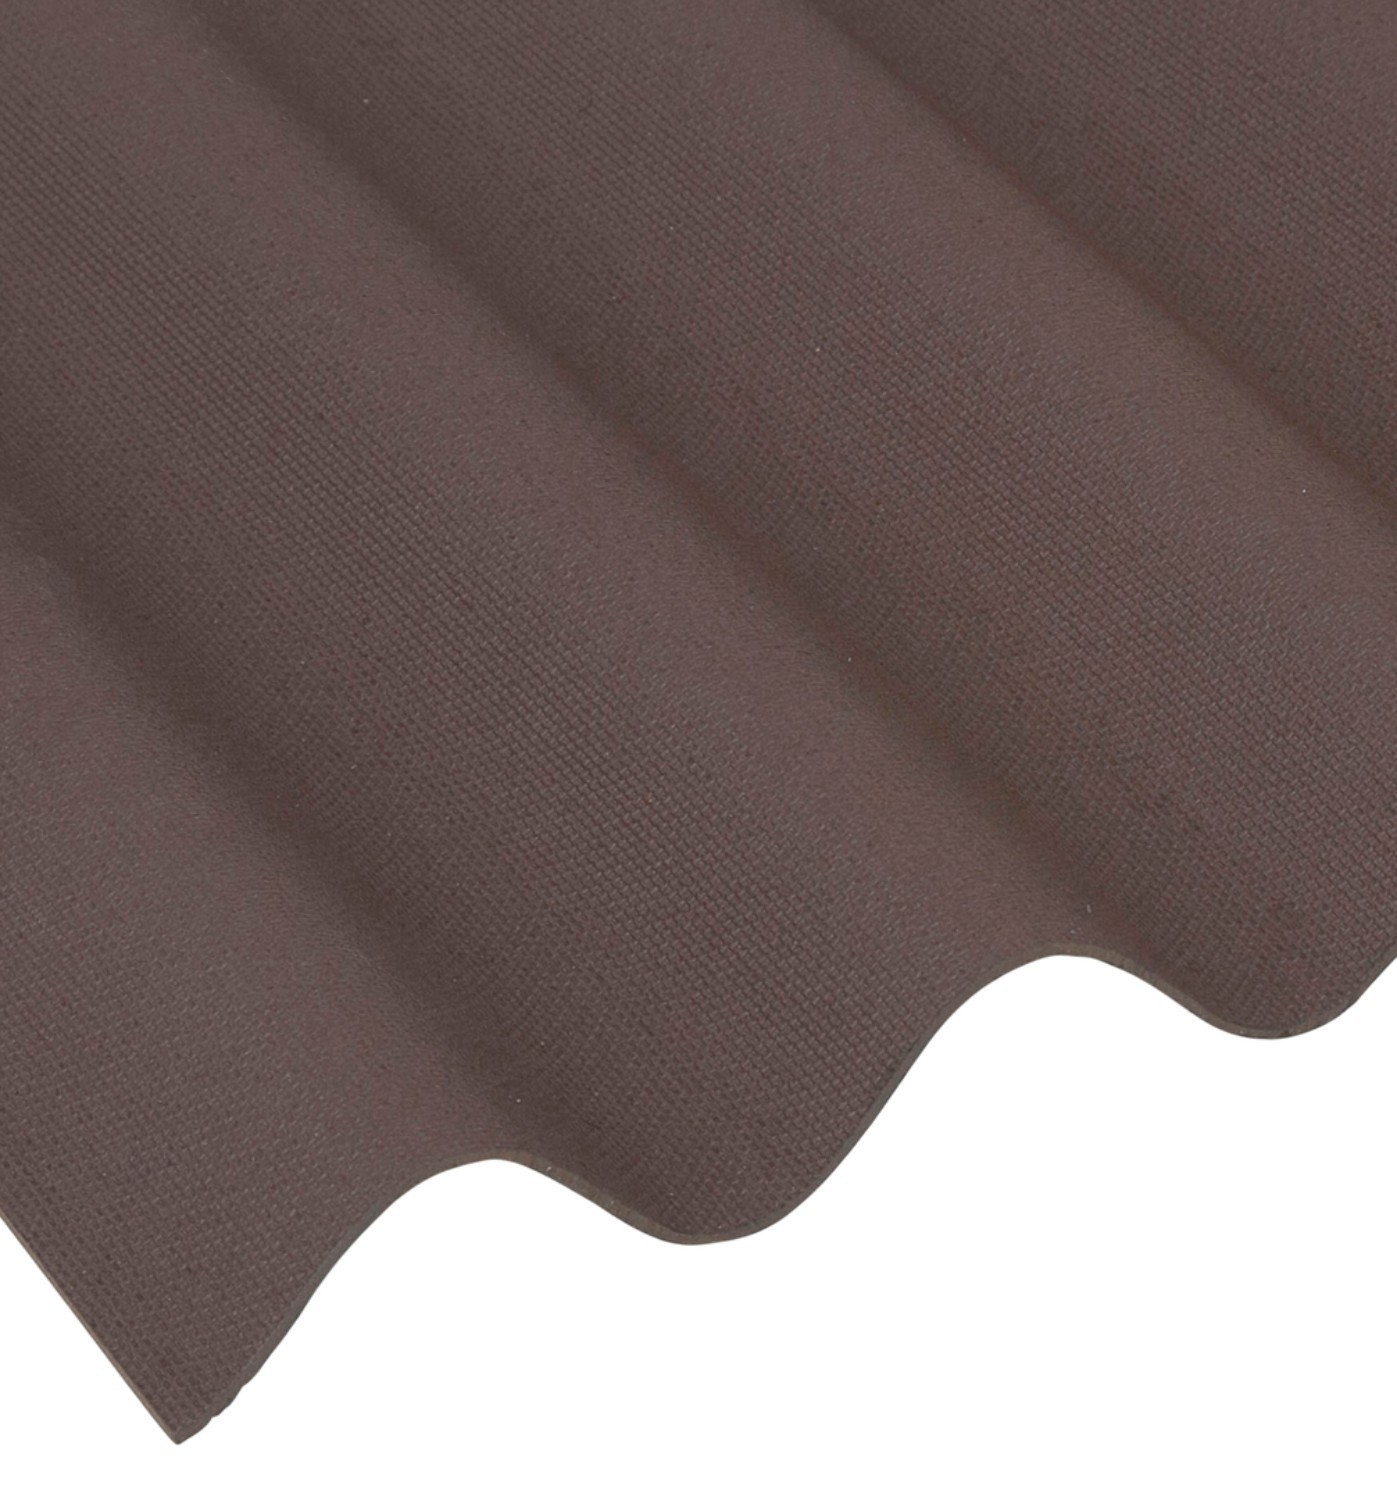 Onduline - Brown Corrugated Bitumen Roof Sheet (2000 x 950mm)